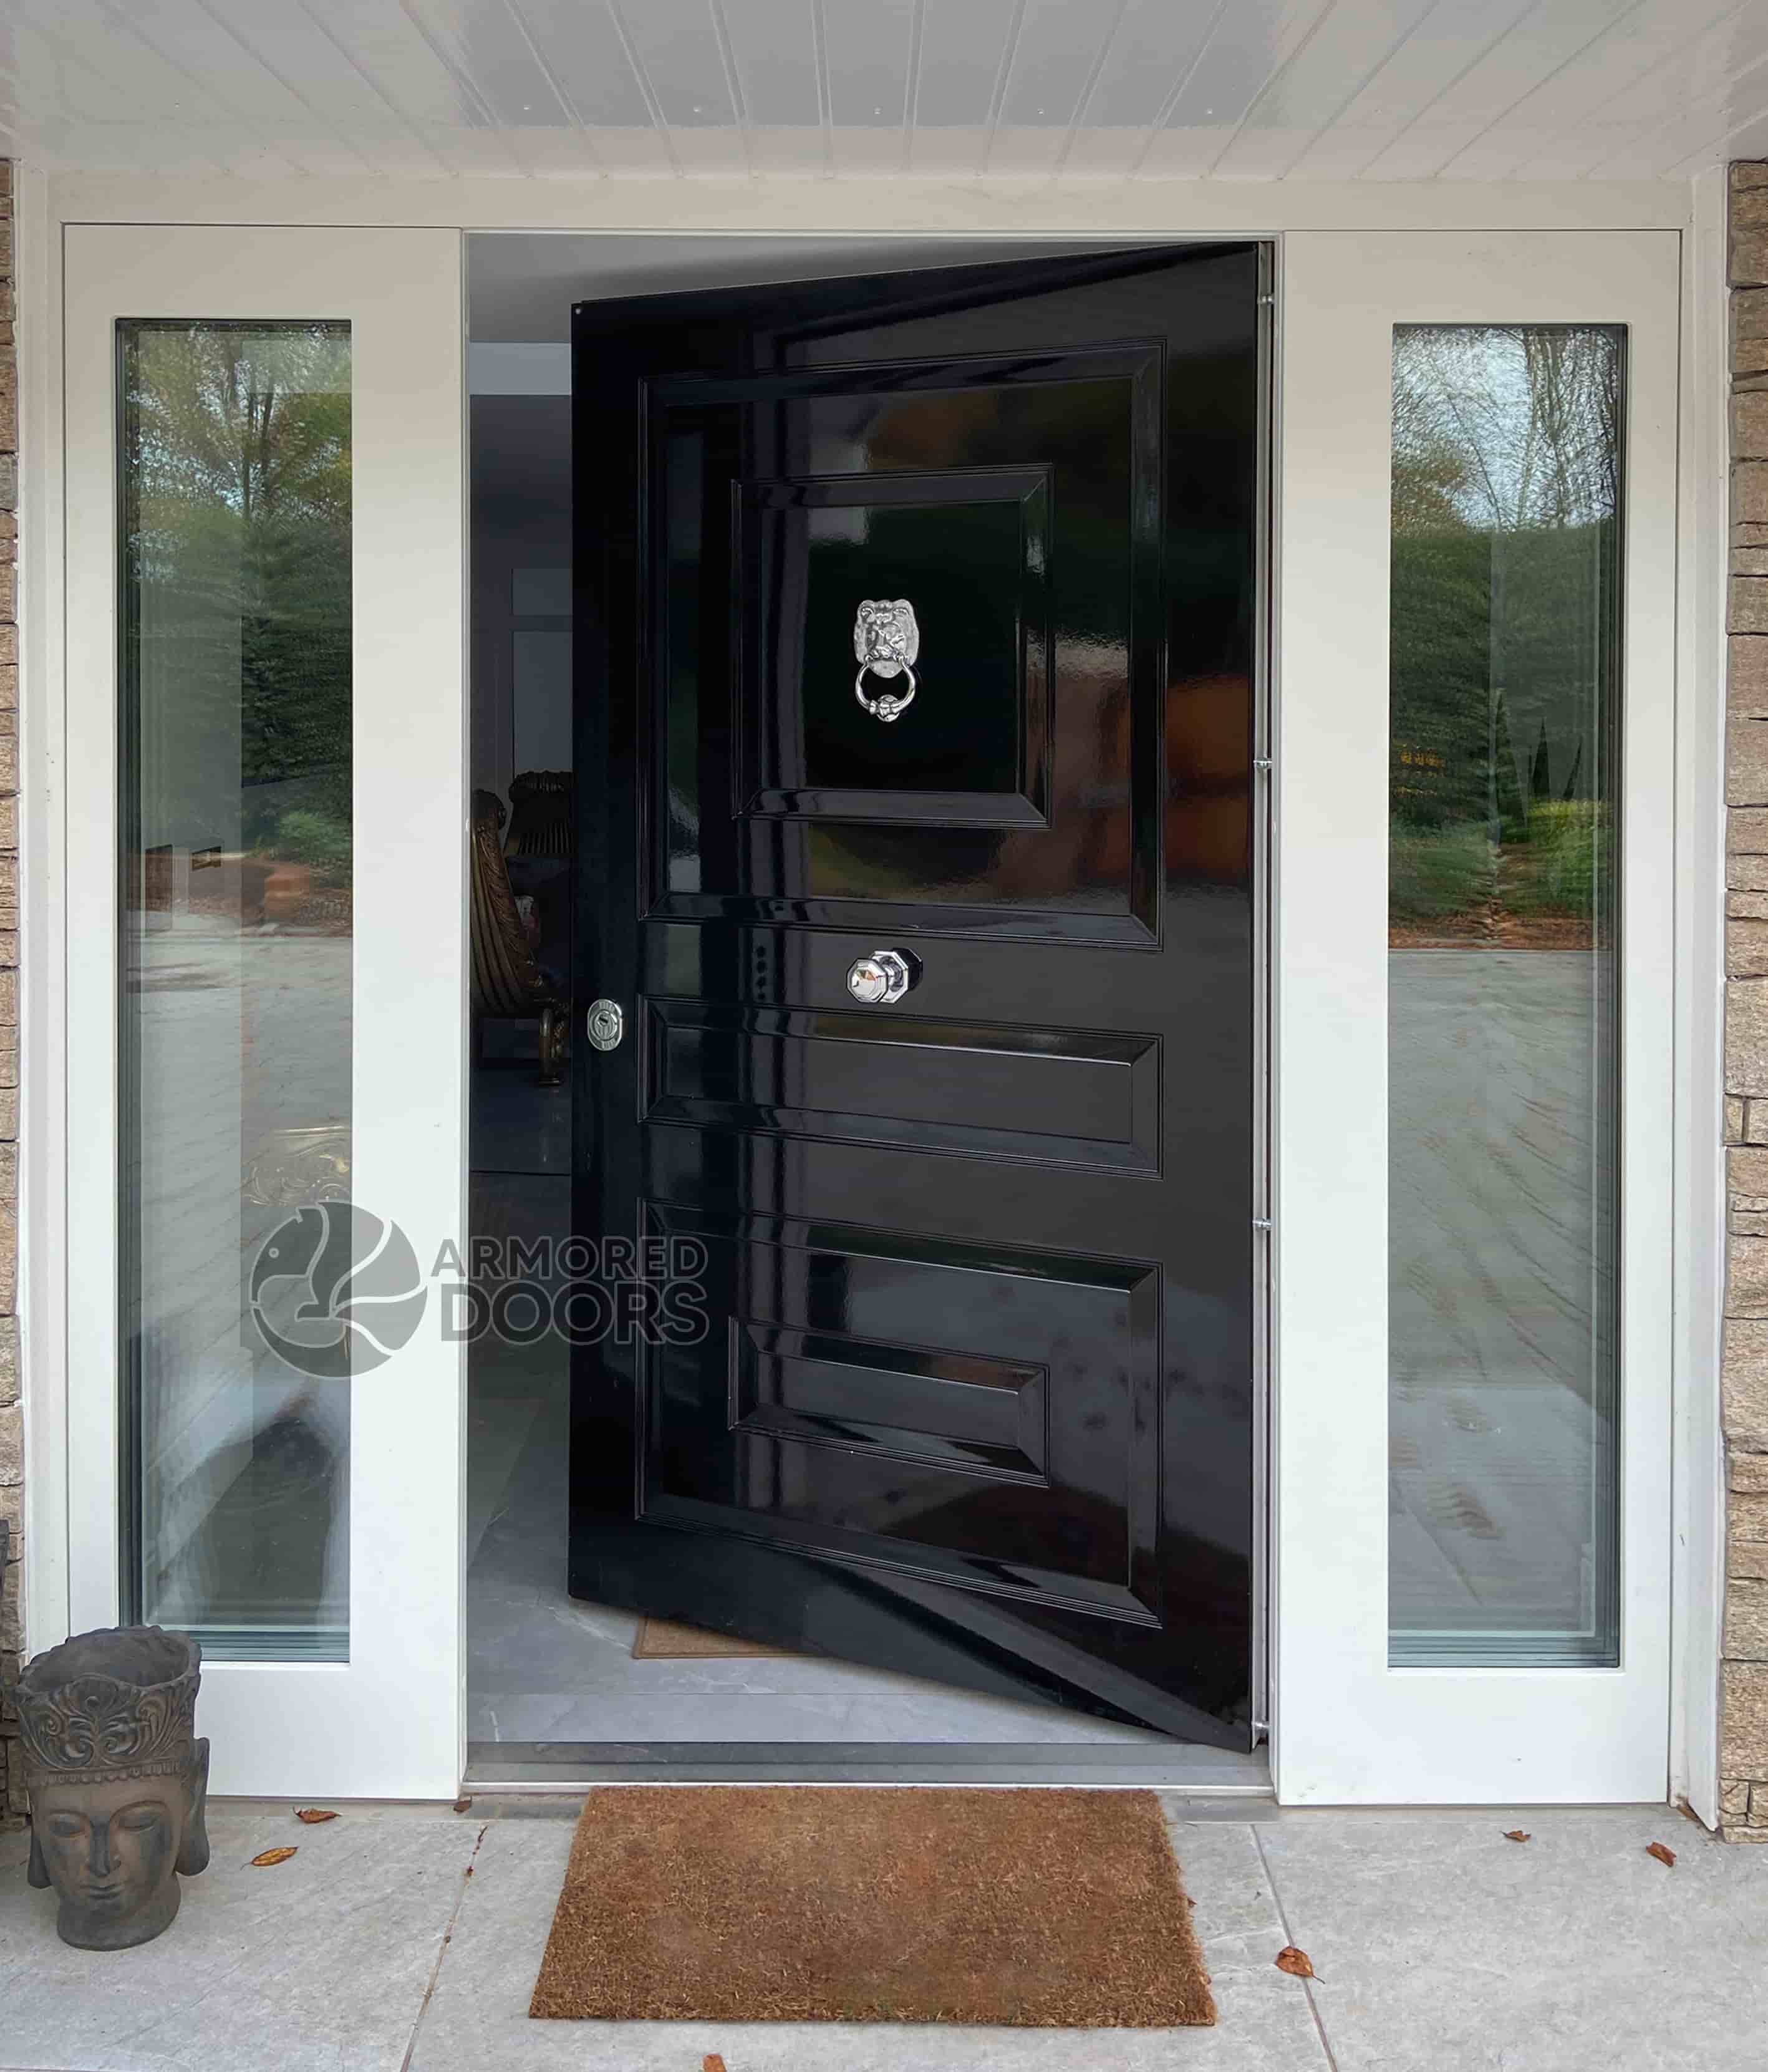 bullet and burglar resistant doors and windows